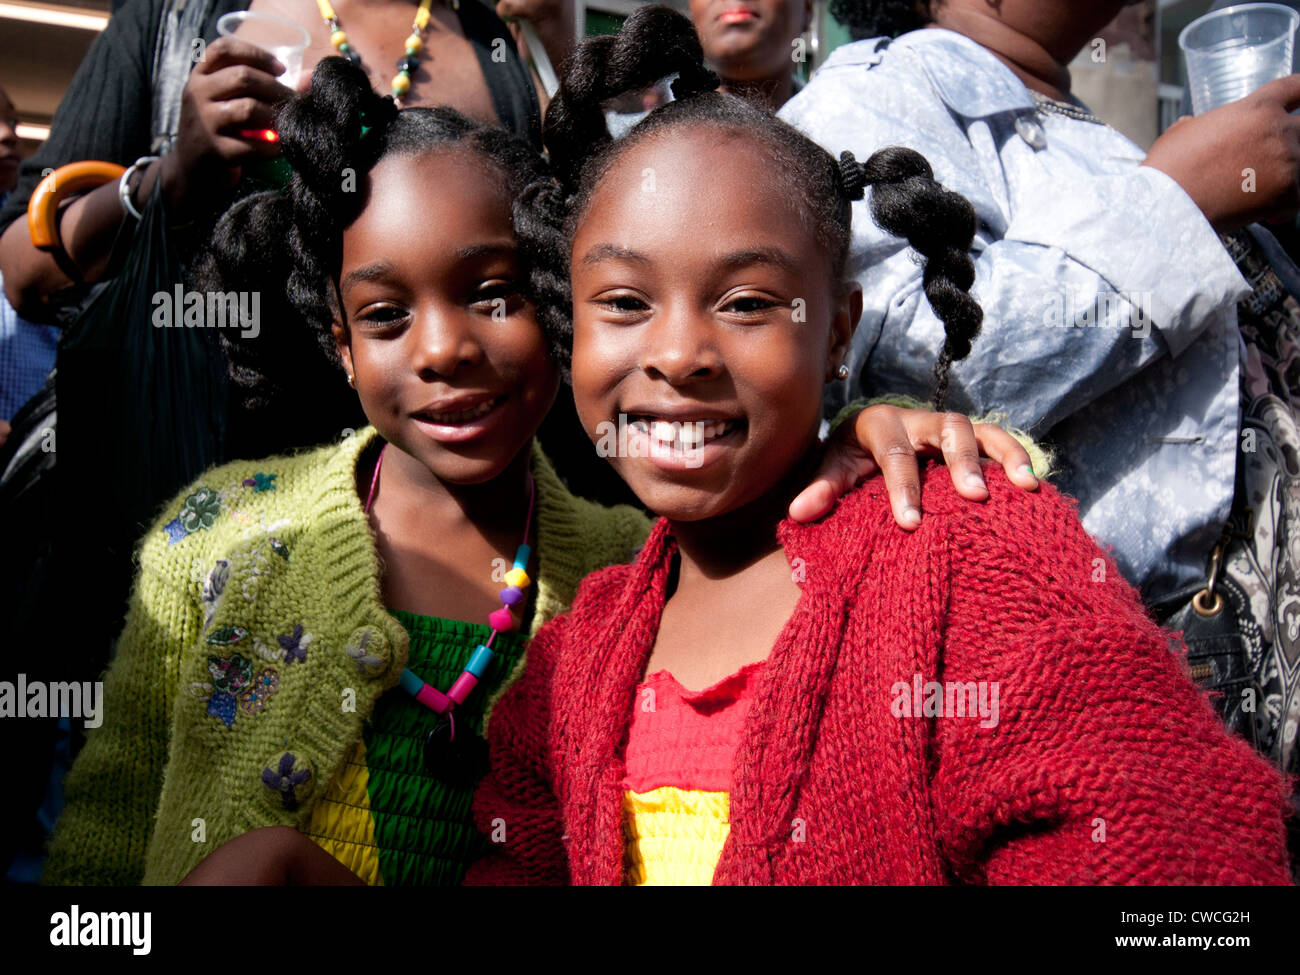 Children celebrating at Jamaican celebrations in Brixton Stock Photo